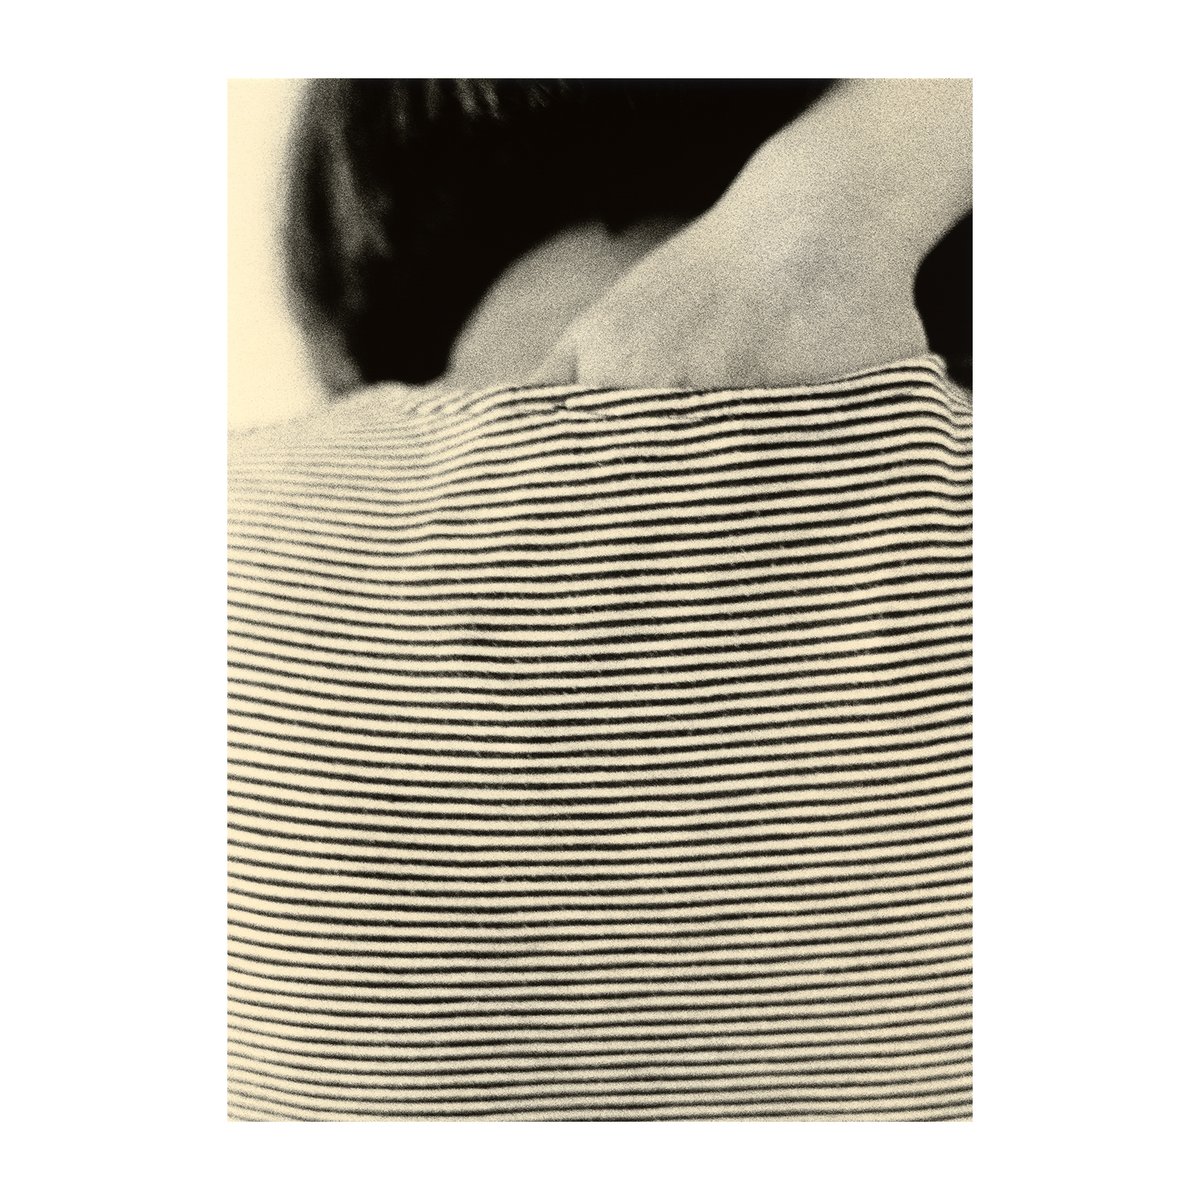 Paper Collective Striped Shirt plakat 30×40 cm